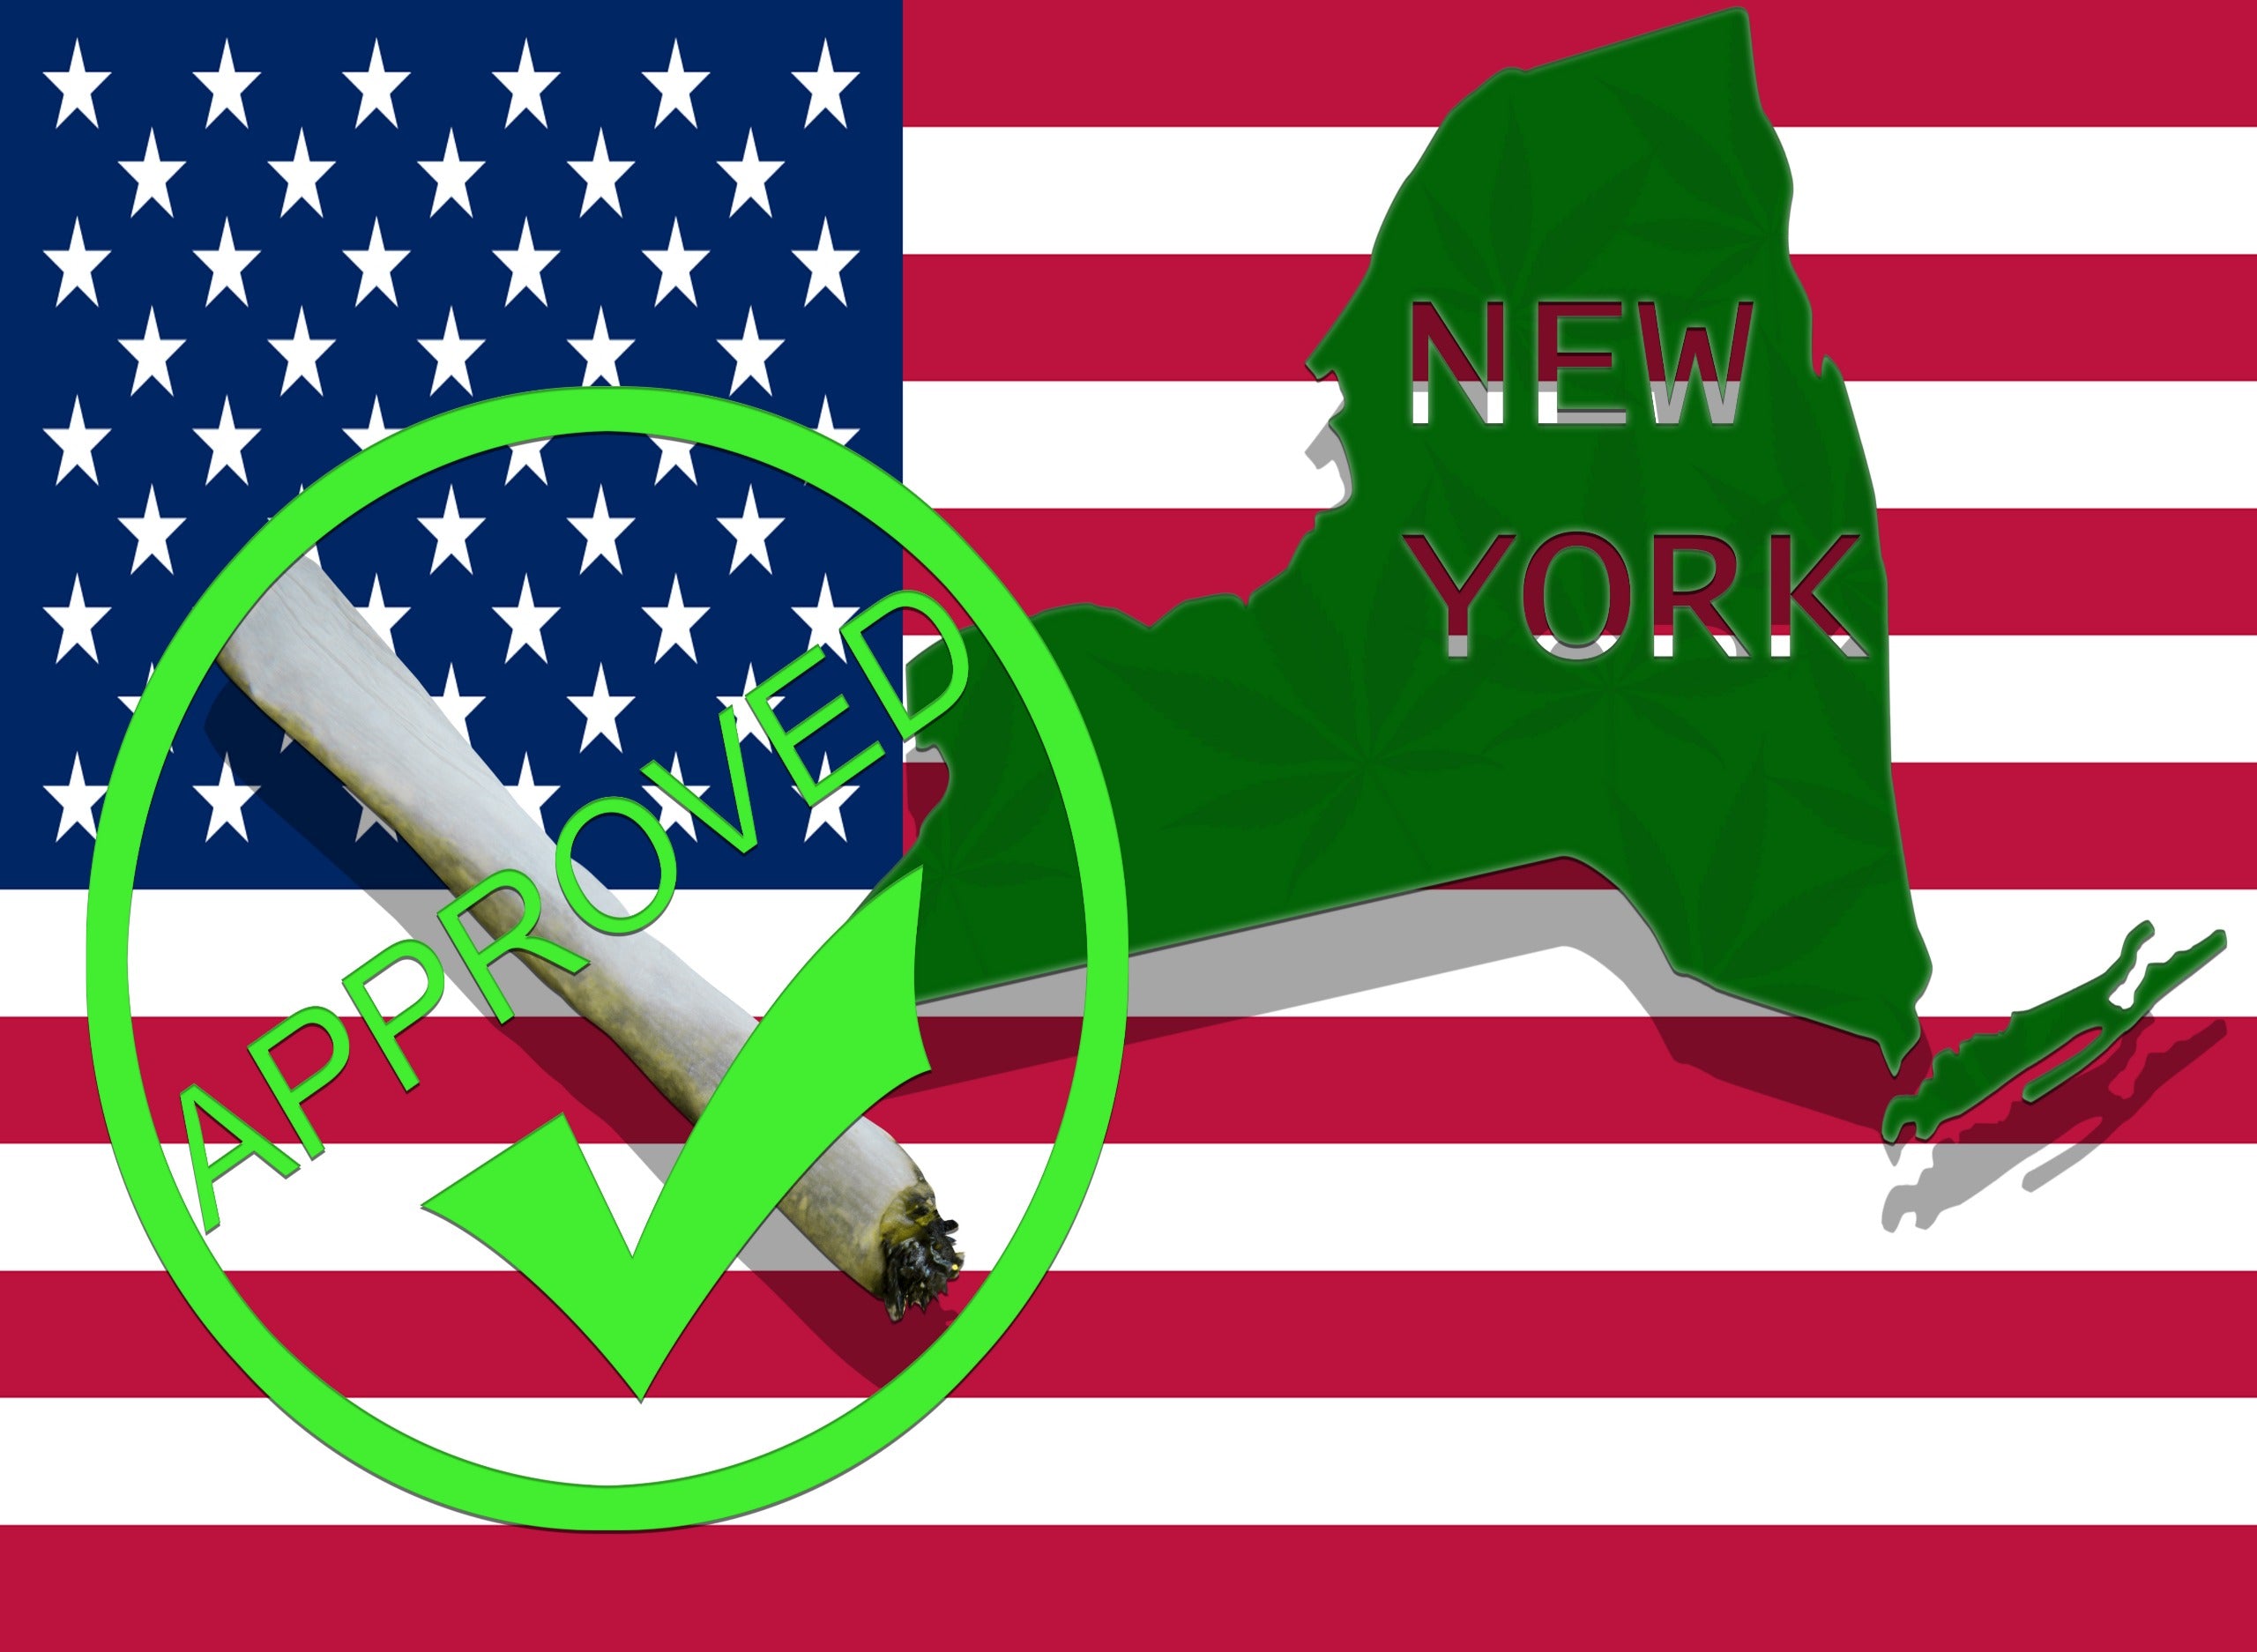 New York Set to Issue 1,500 Additional Marijuana Business Licenses